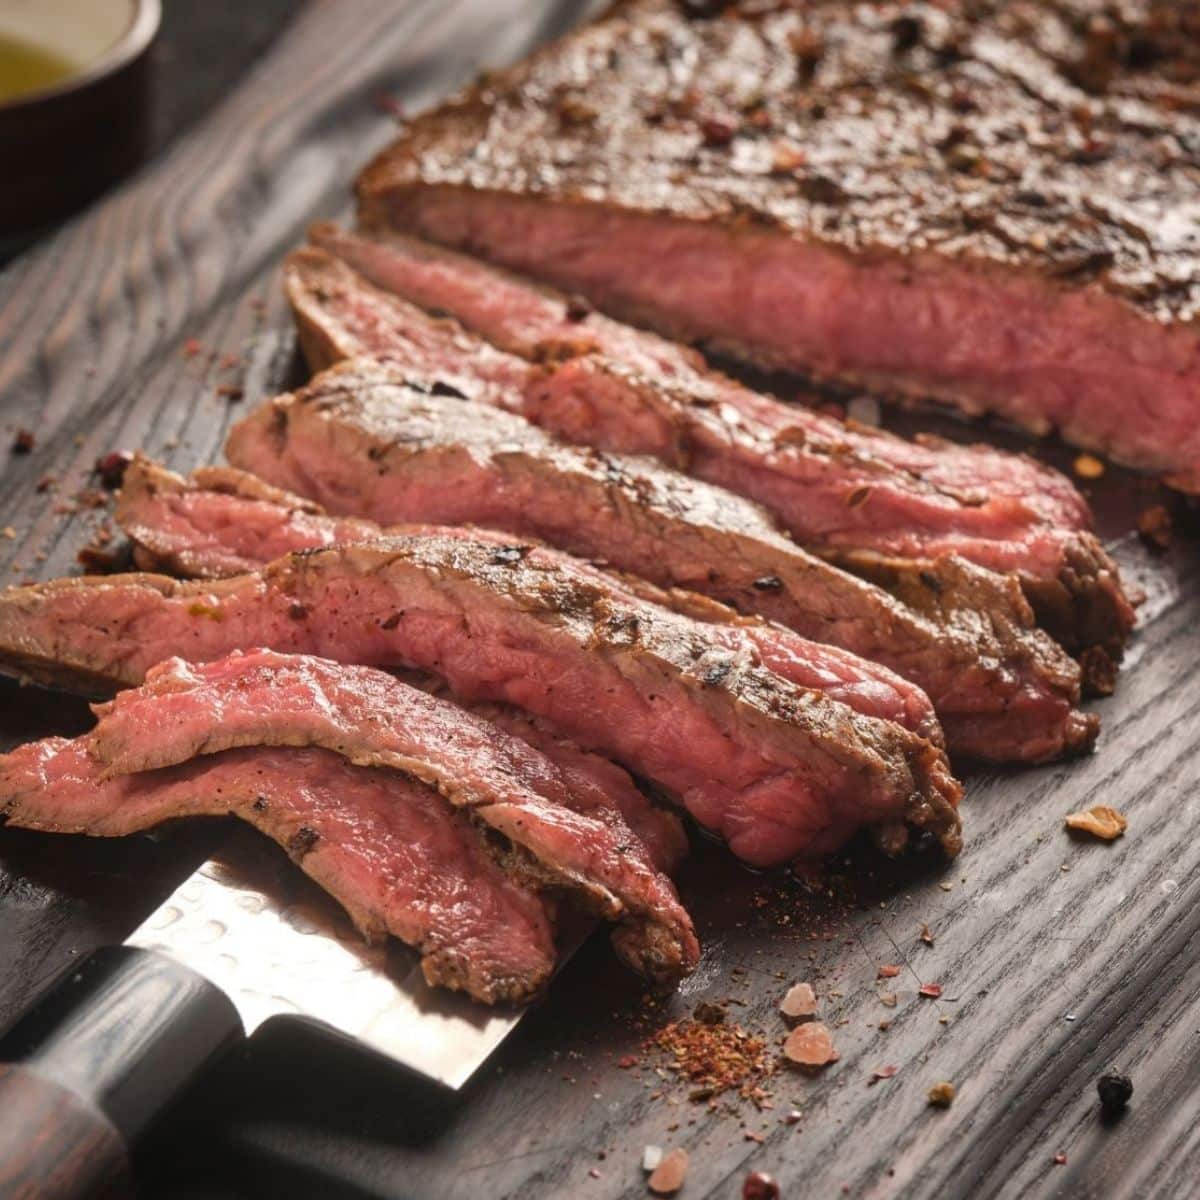 Steak bavette panggang mudah dihiris dan dihidangkan di atas papan pemotong kayu.